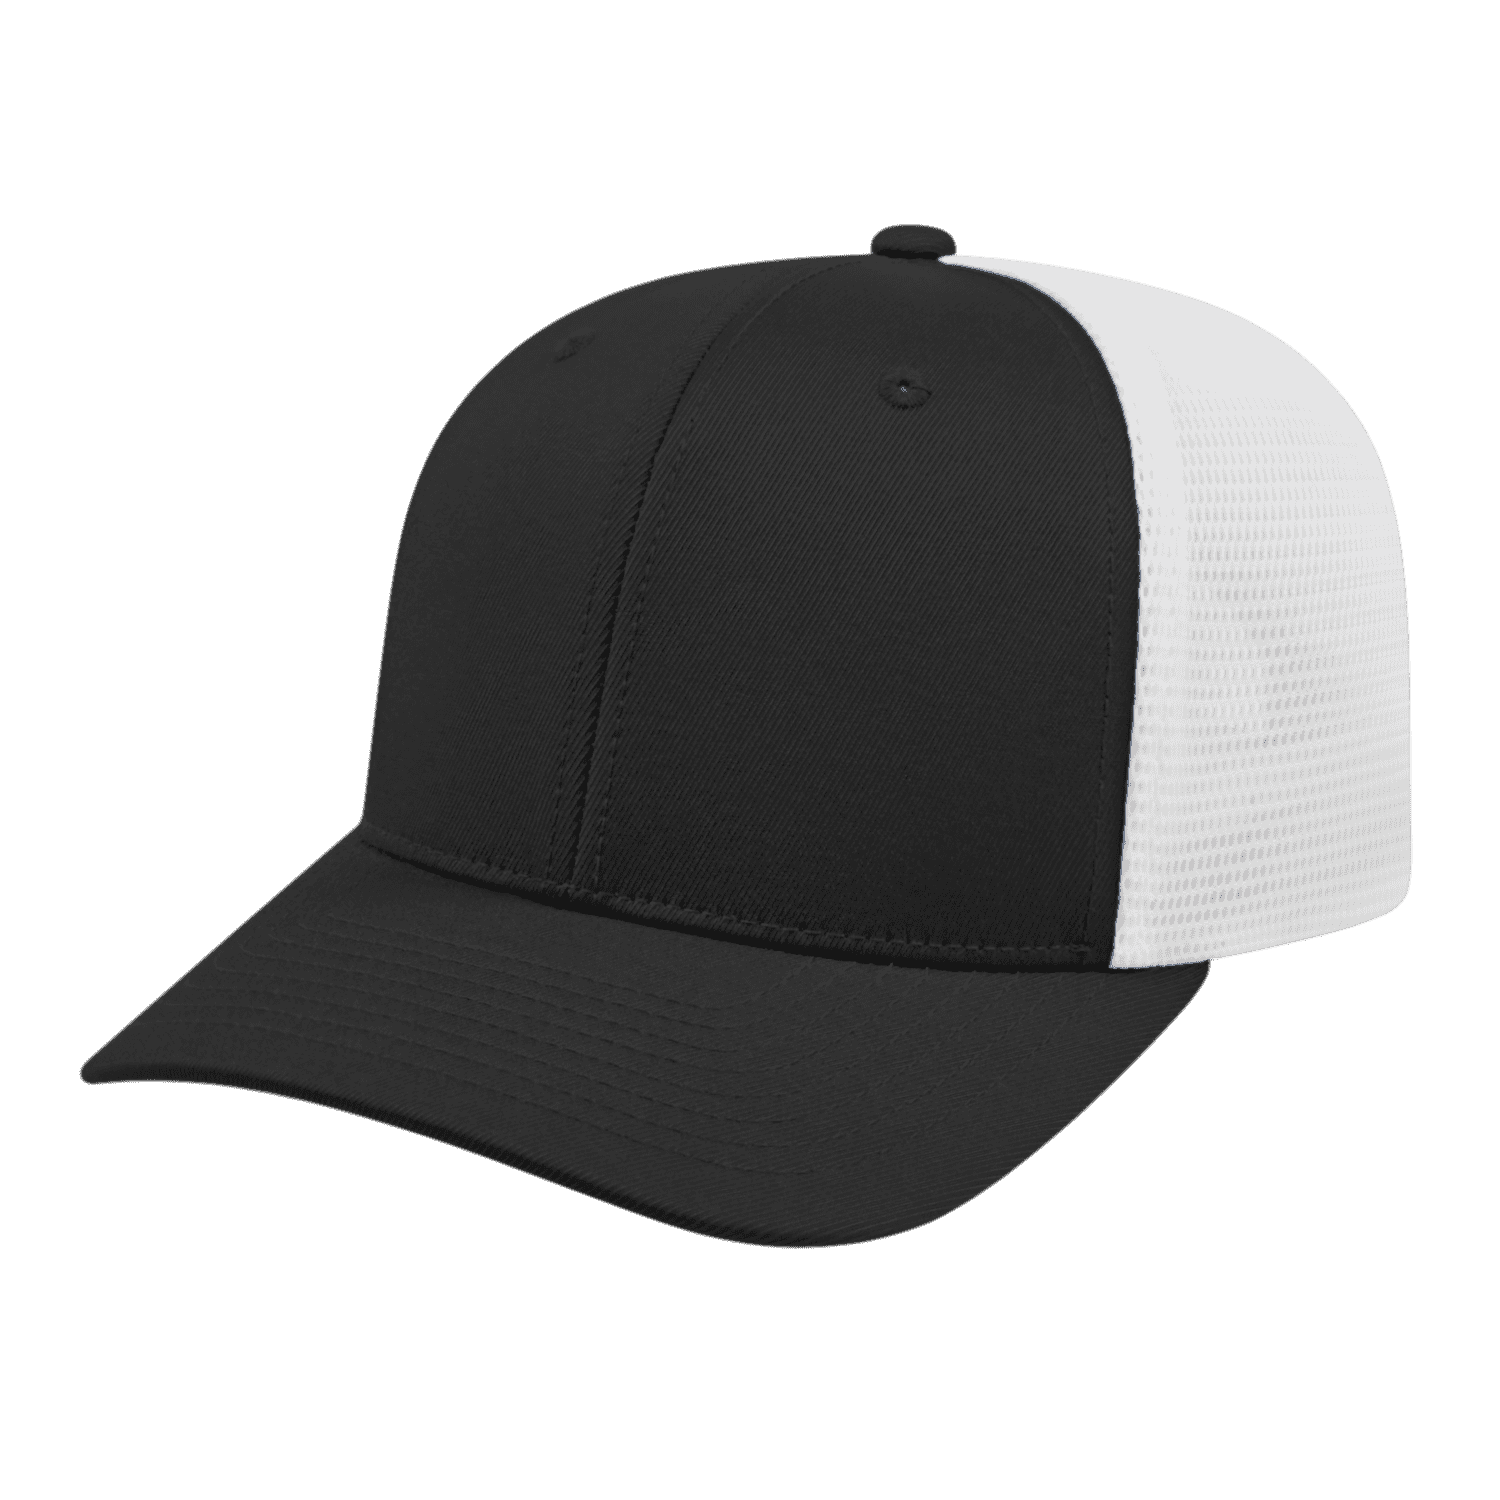 Mesh Black Cap America Cap White i8502 110 Trucker - Back Flexfit